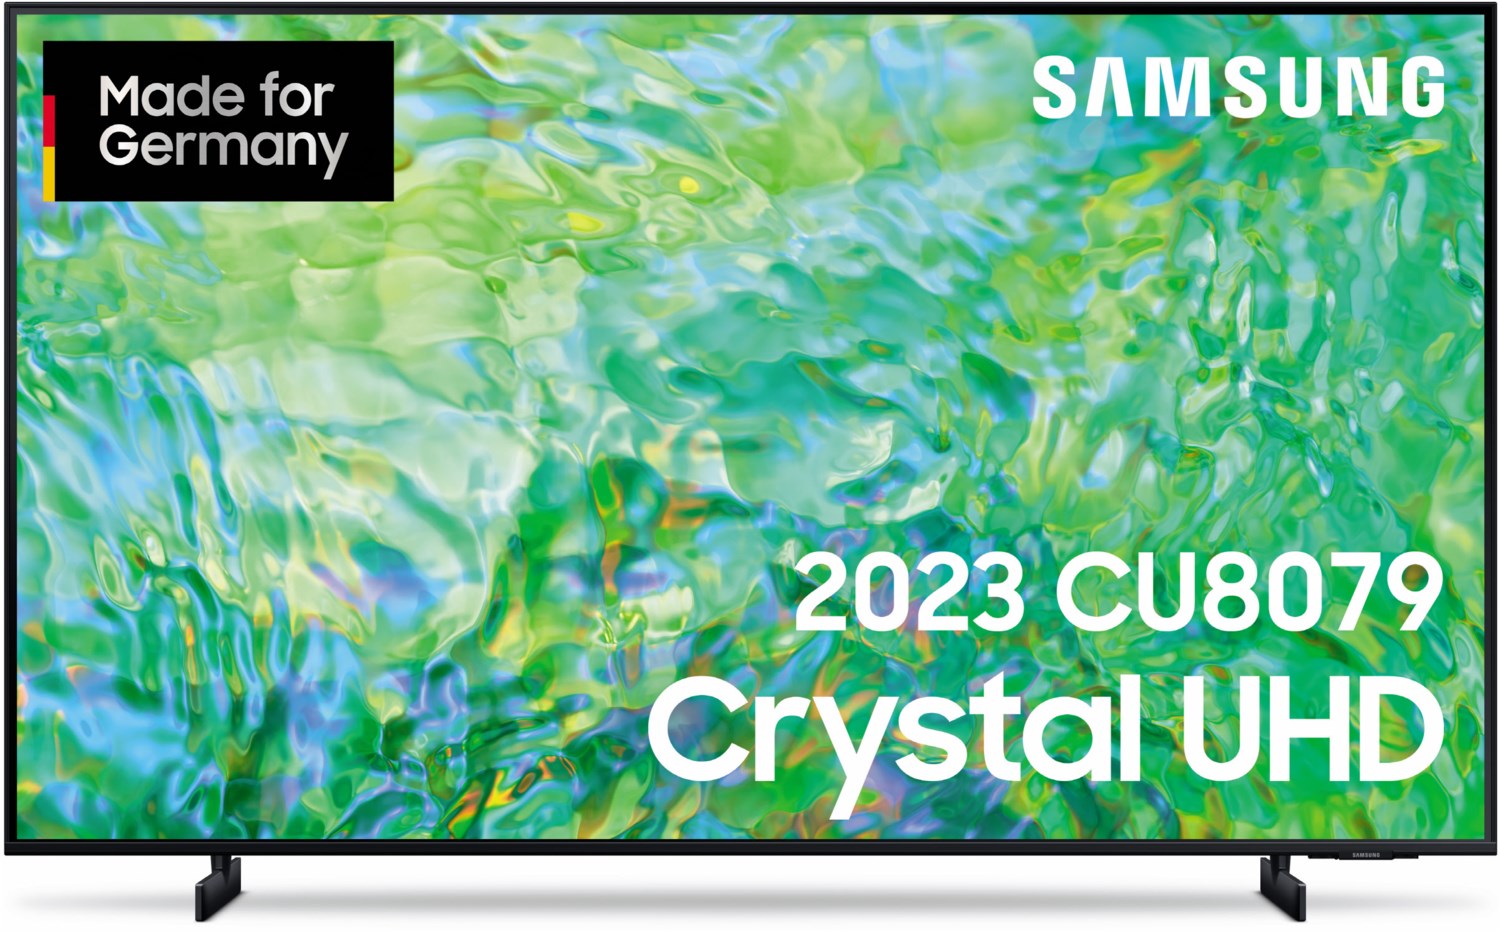 Samsung Crystal UHD TV 43 Zoll (107 cm) 4K schwarz